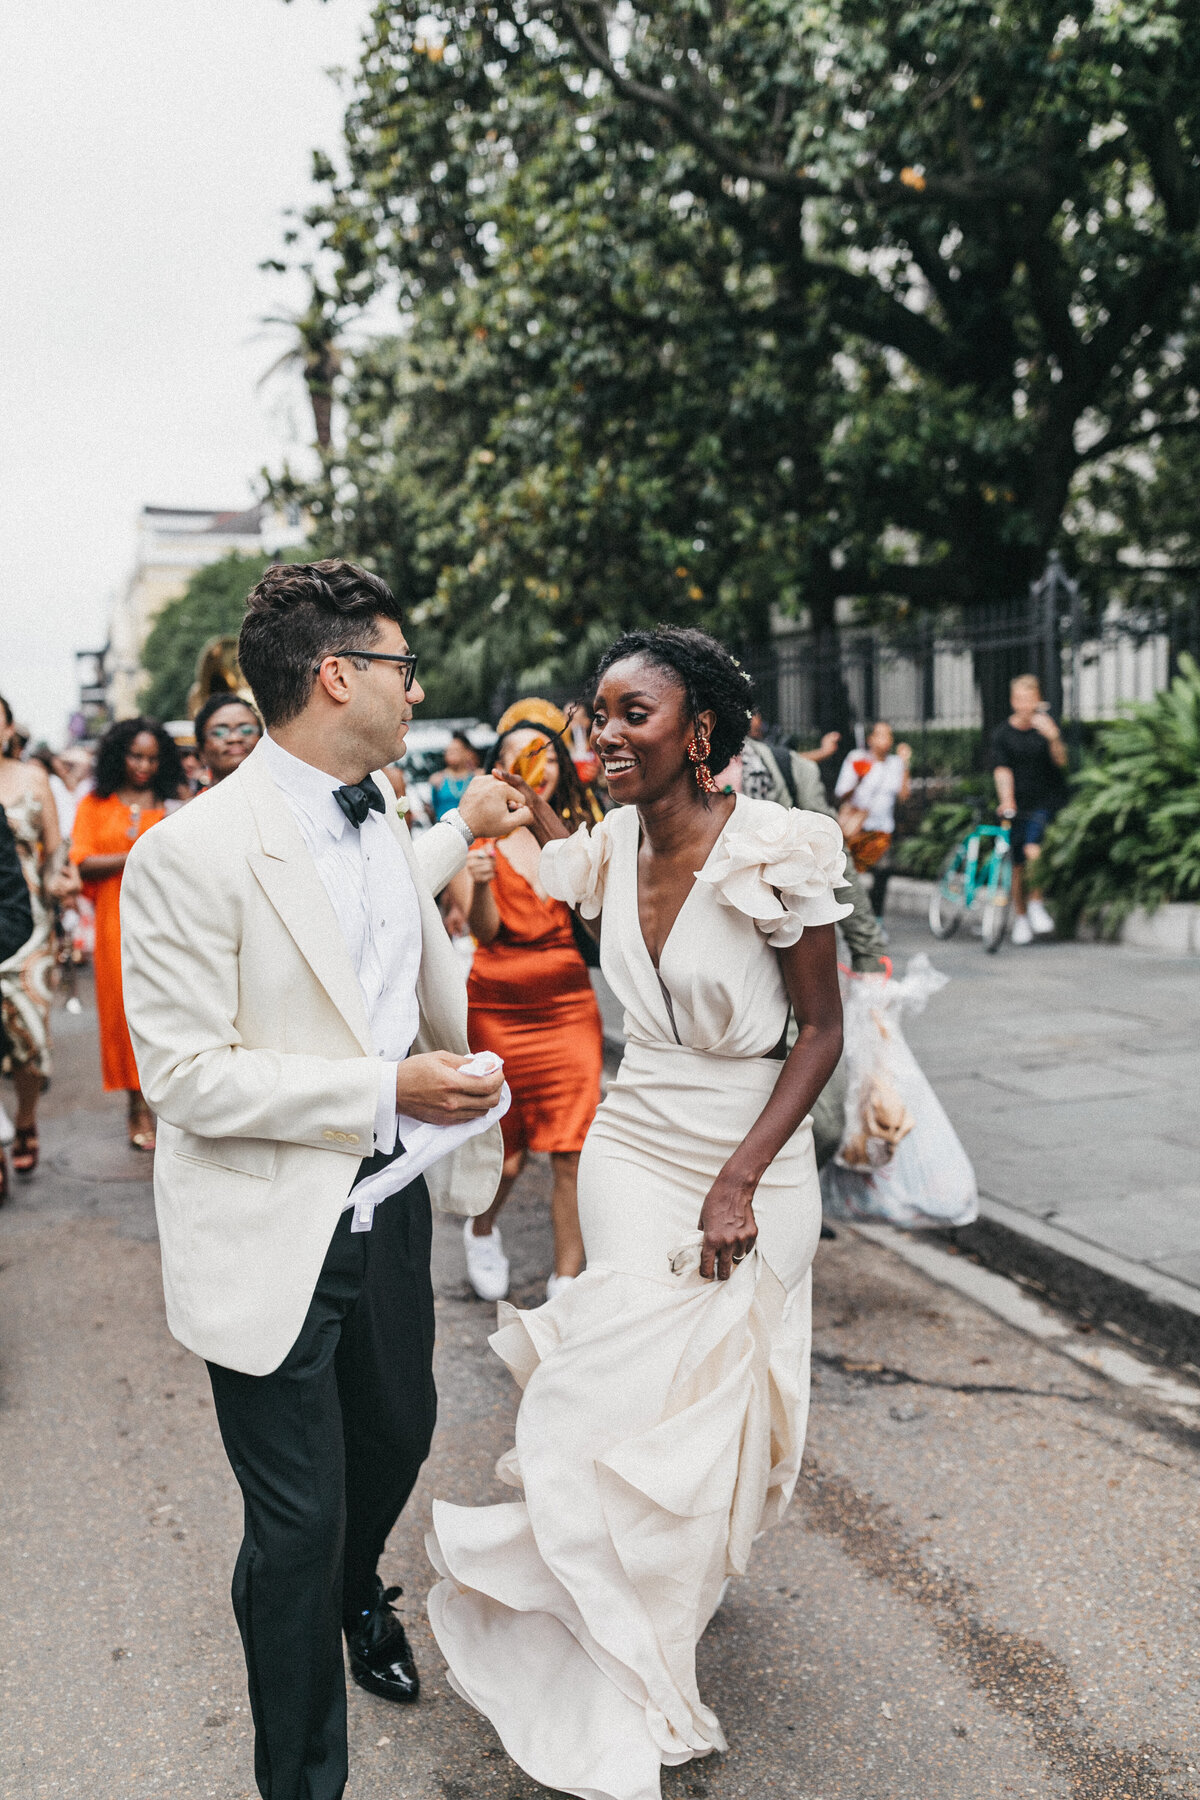 Michelle Norwood Events | NOLA Weddings + Destination Weddings Worldwide - New Orleans Wedding - Bridgette Saul - Featured in Vogue Weddings